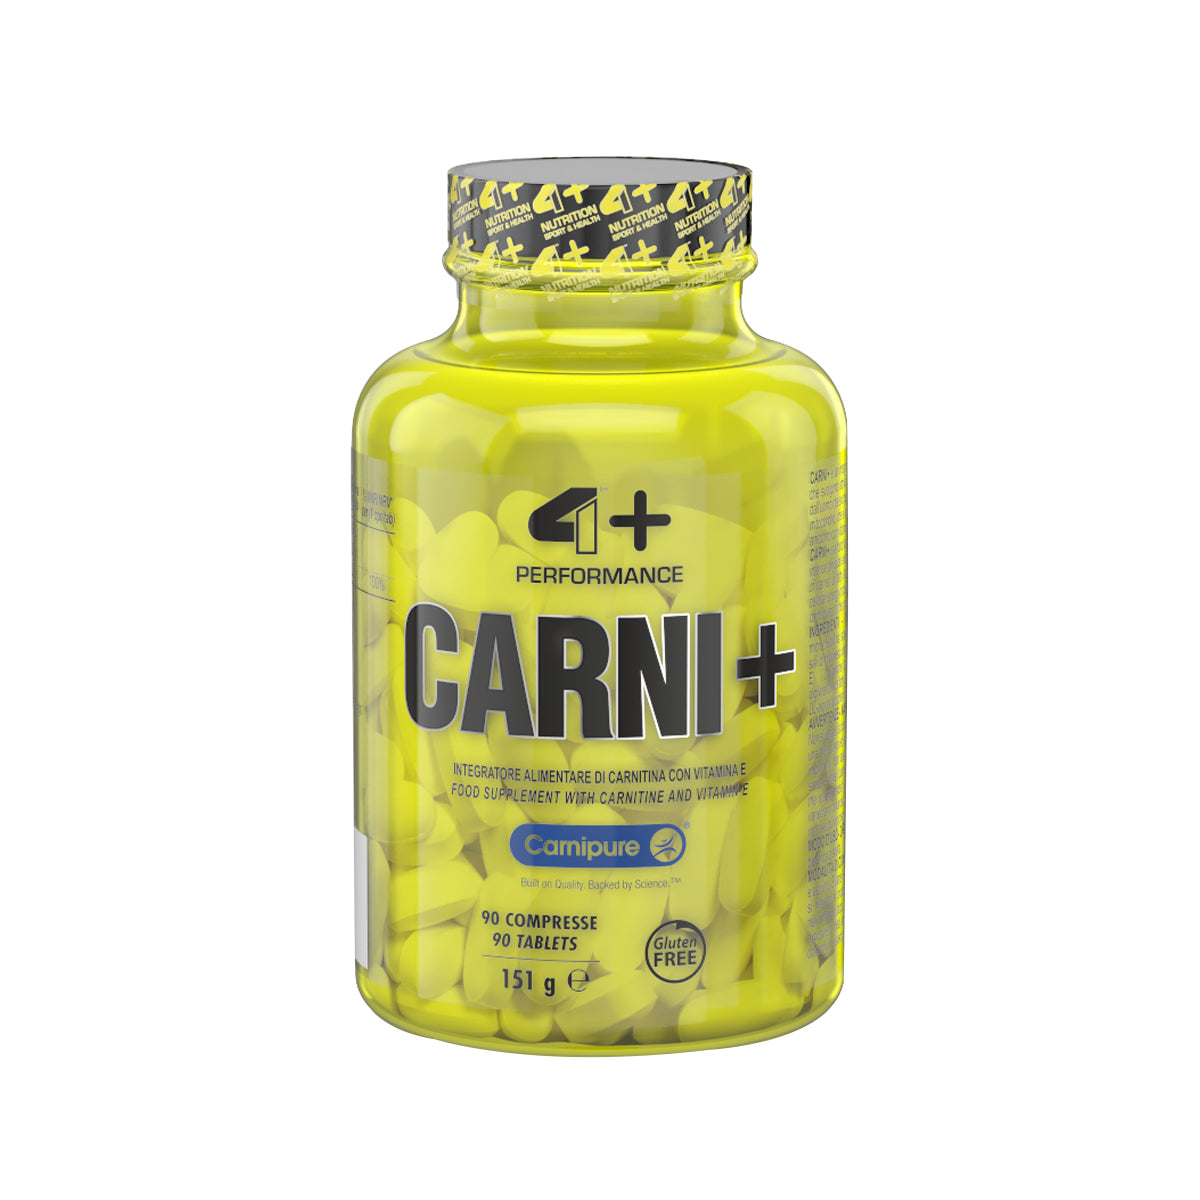 4+ CARNI + Nutrition